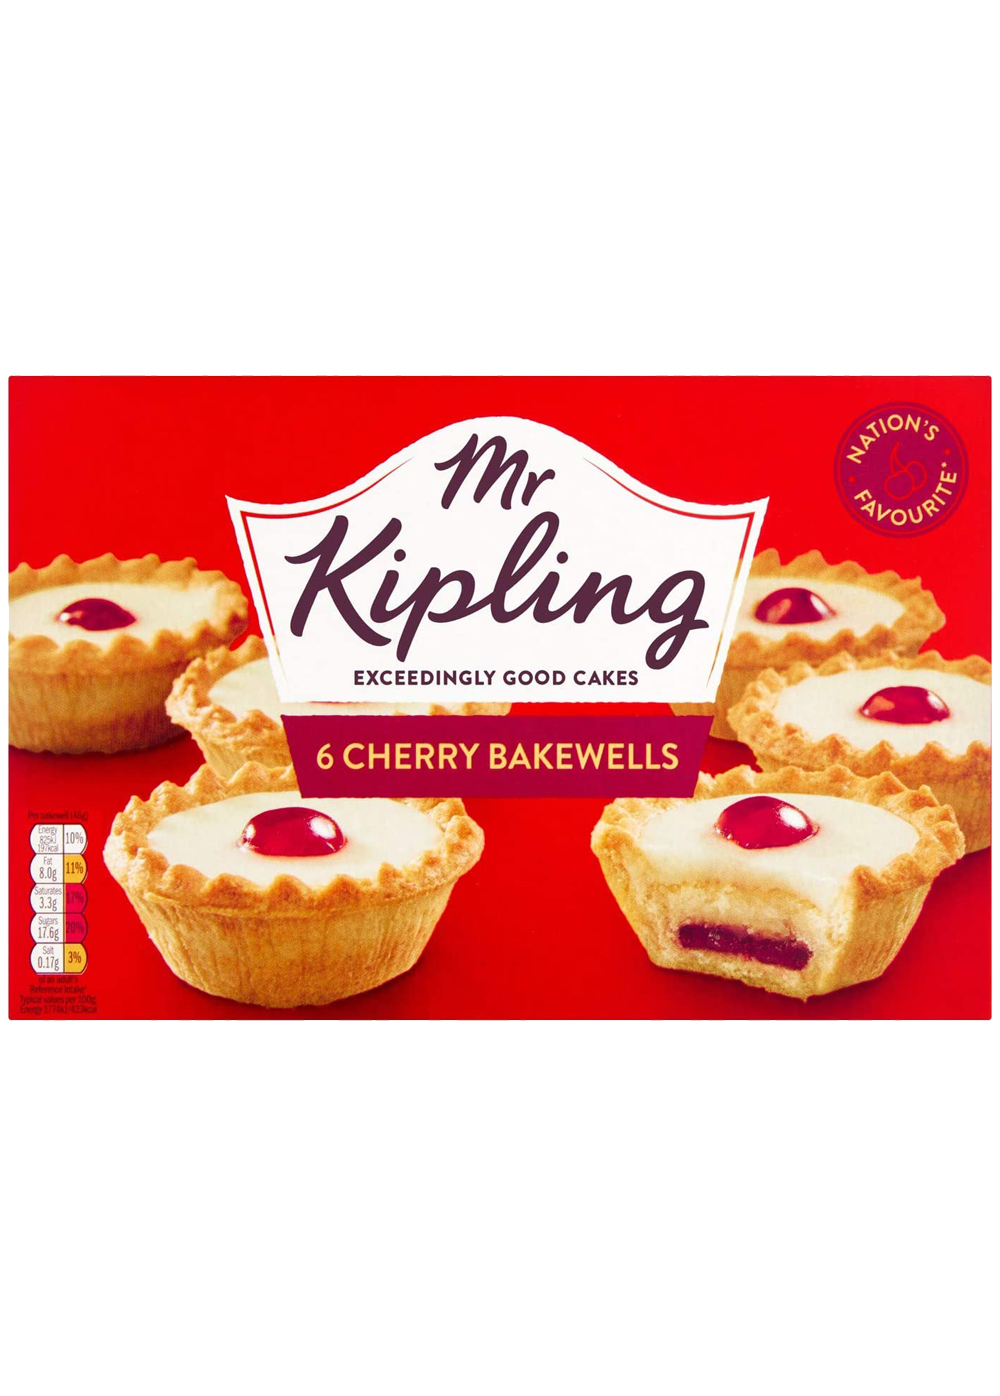 Mr Kipling Exceedingly Good Cakes 6 Cherry Bakewells